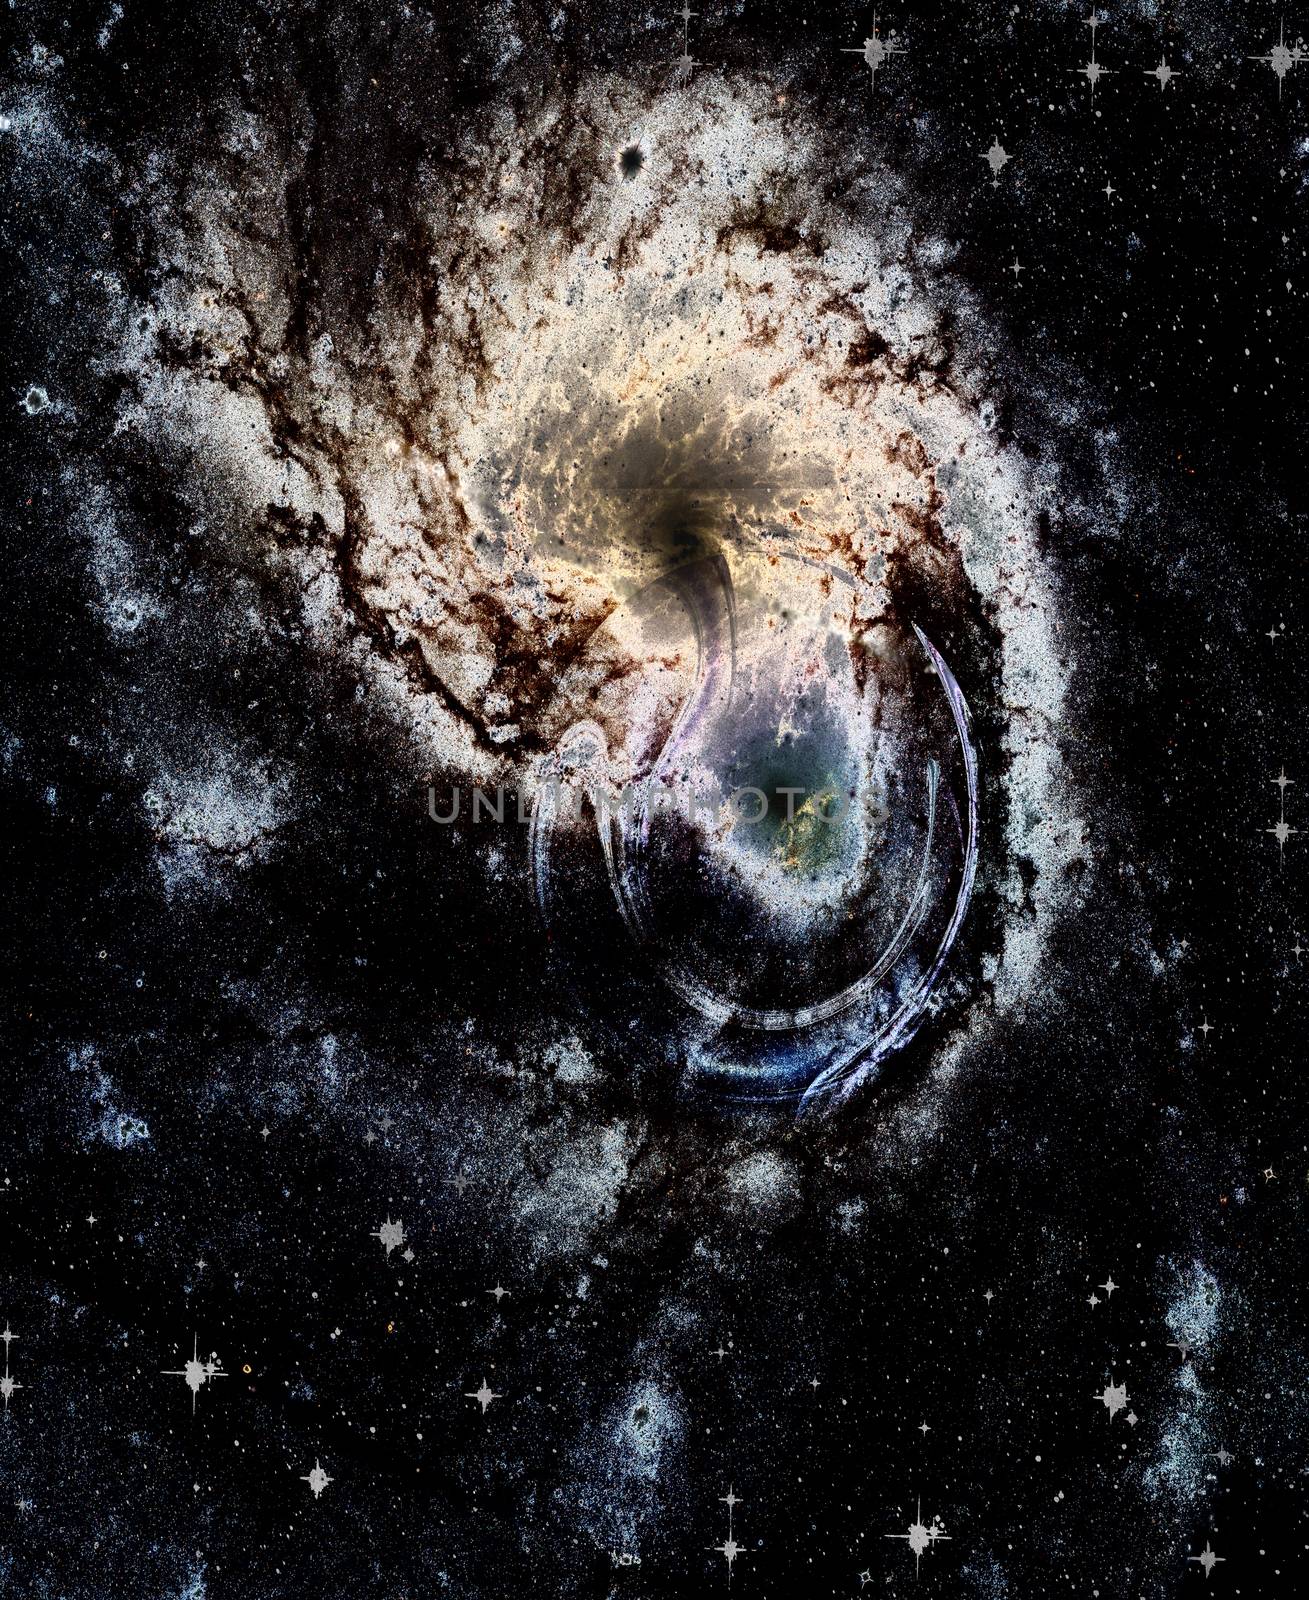 A spiral Galaxy in the Universe. by georgina198